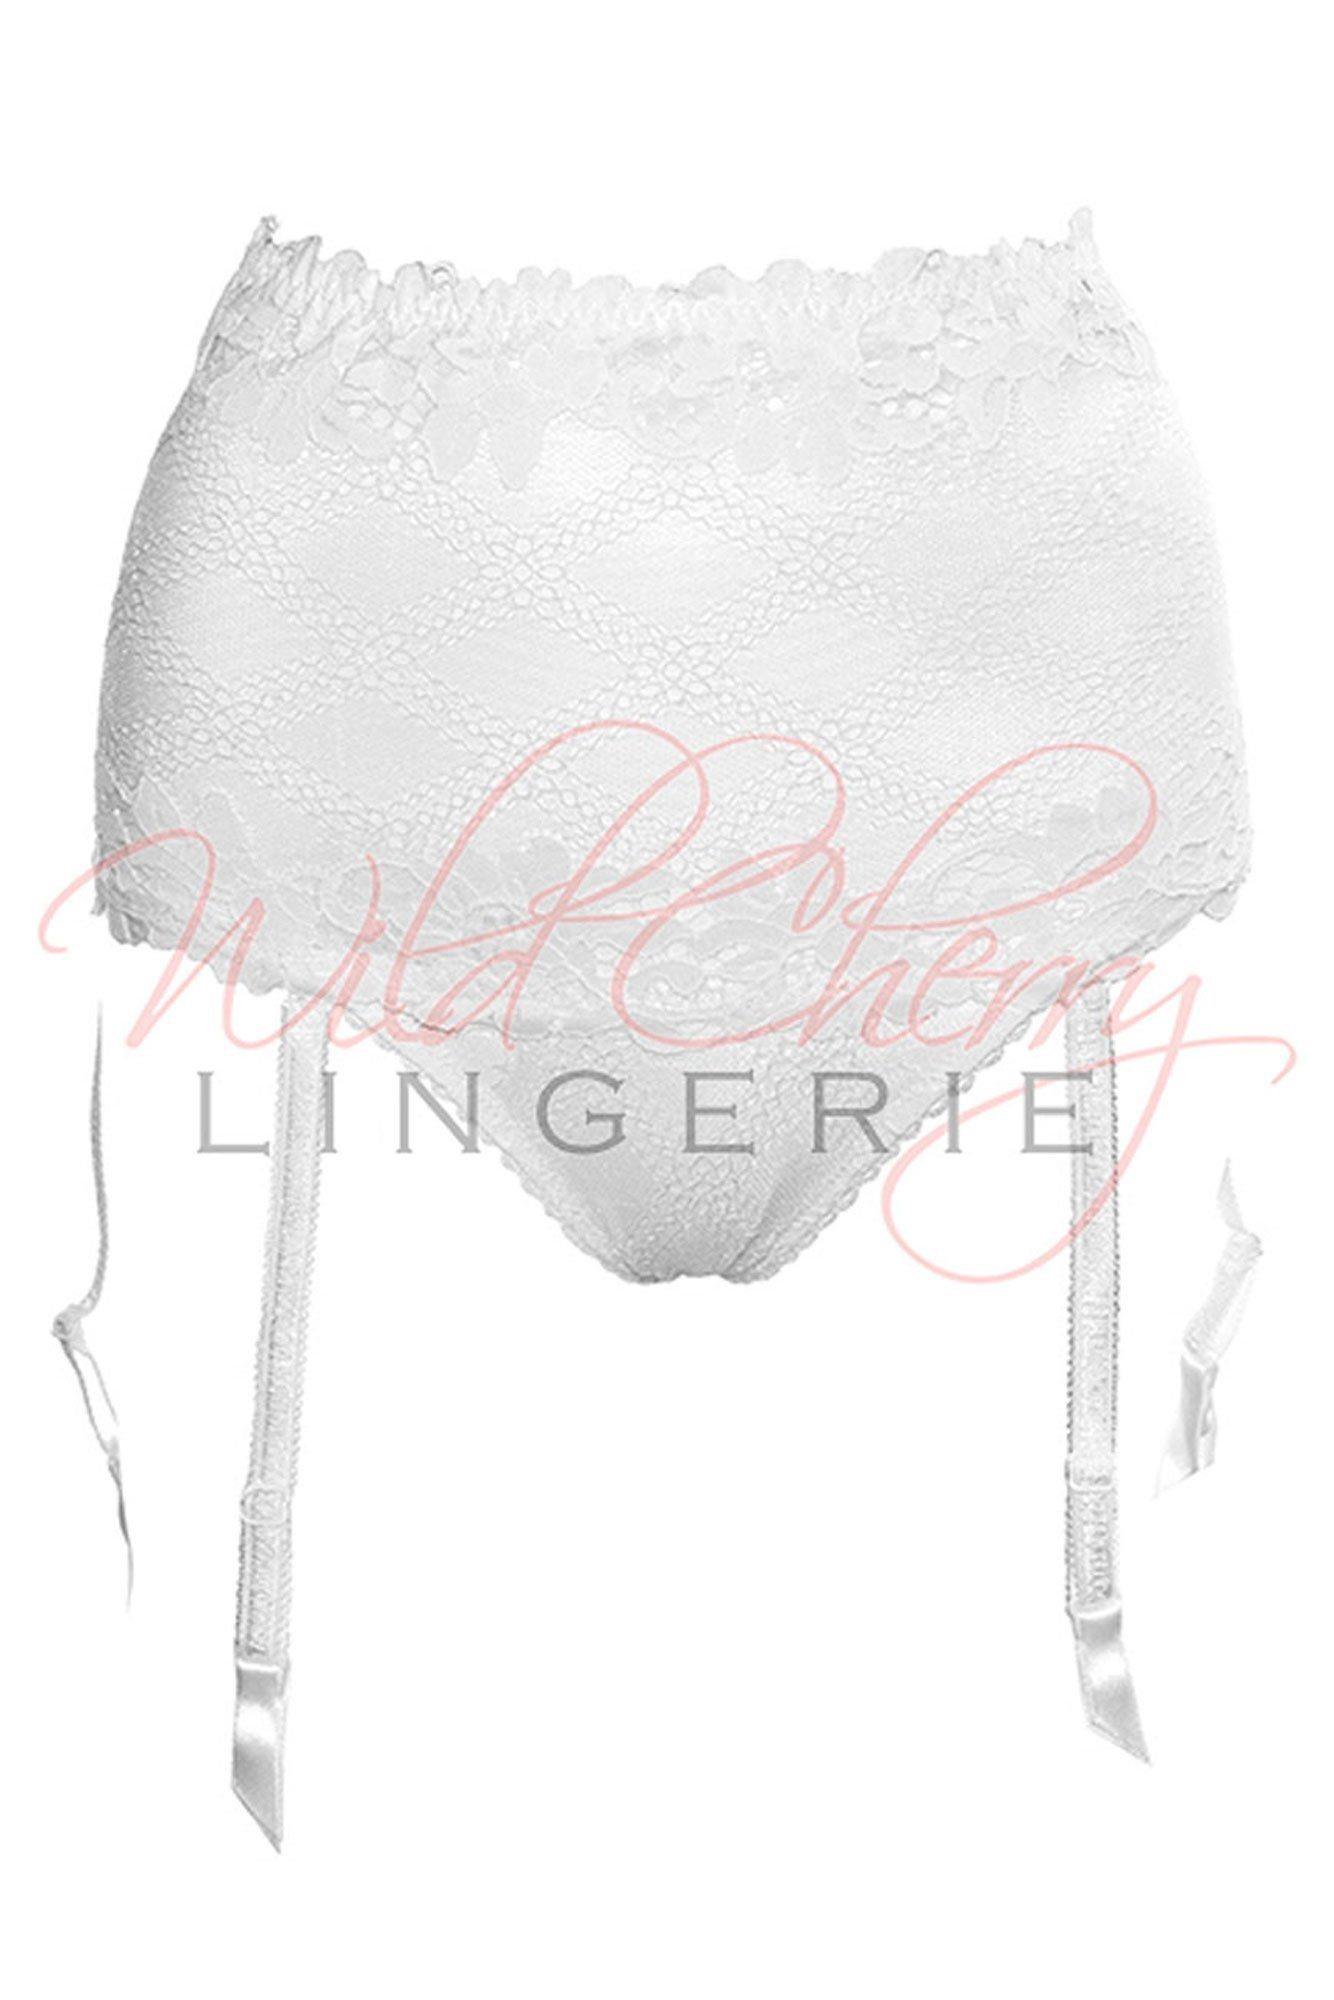 Daniella White Collection High-Waist Brief Panty VIPA Lingerie, Panties, VIPA Lingerie - Wild Cherry Lingerie